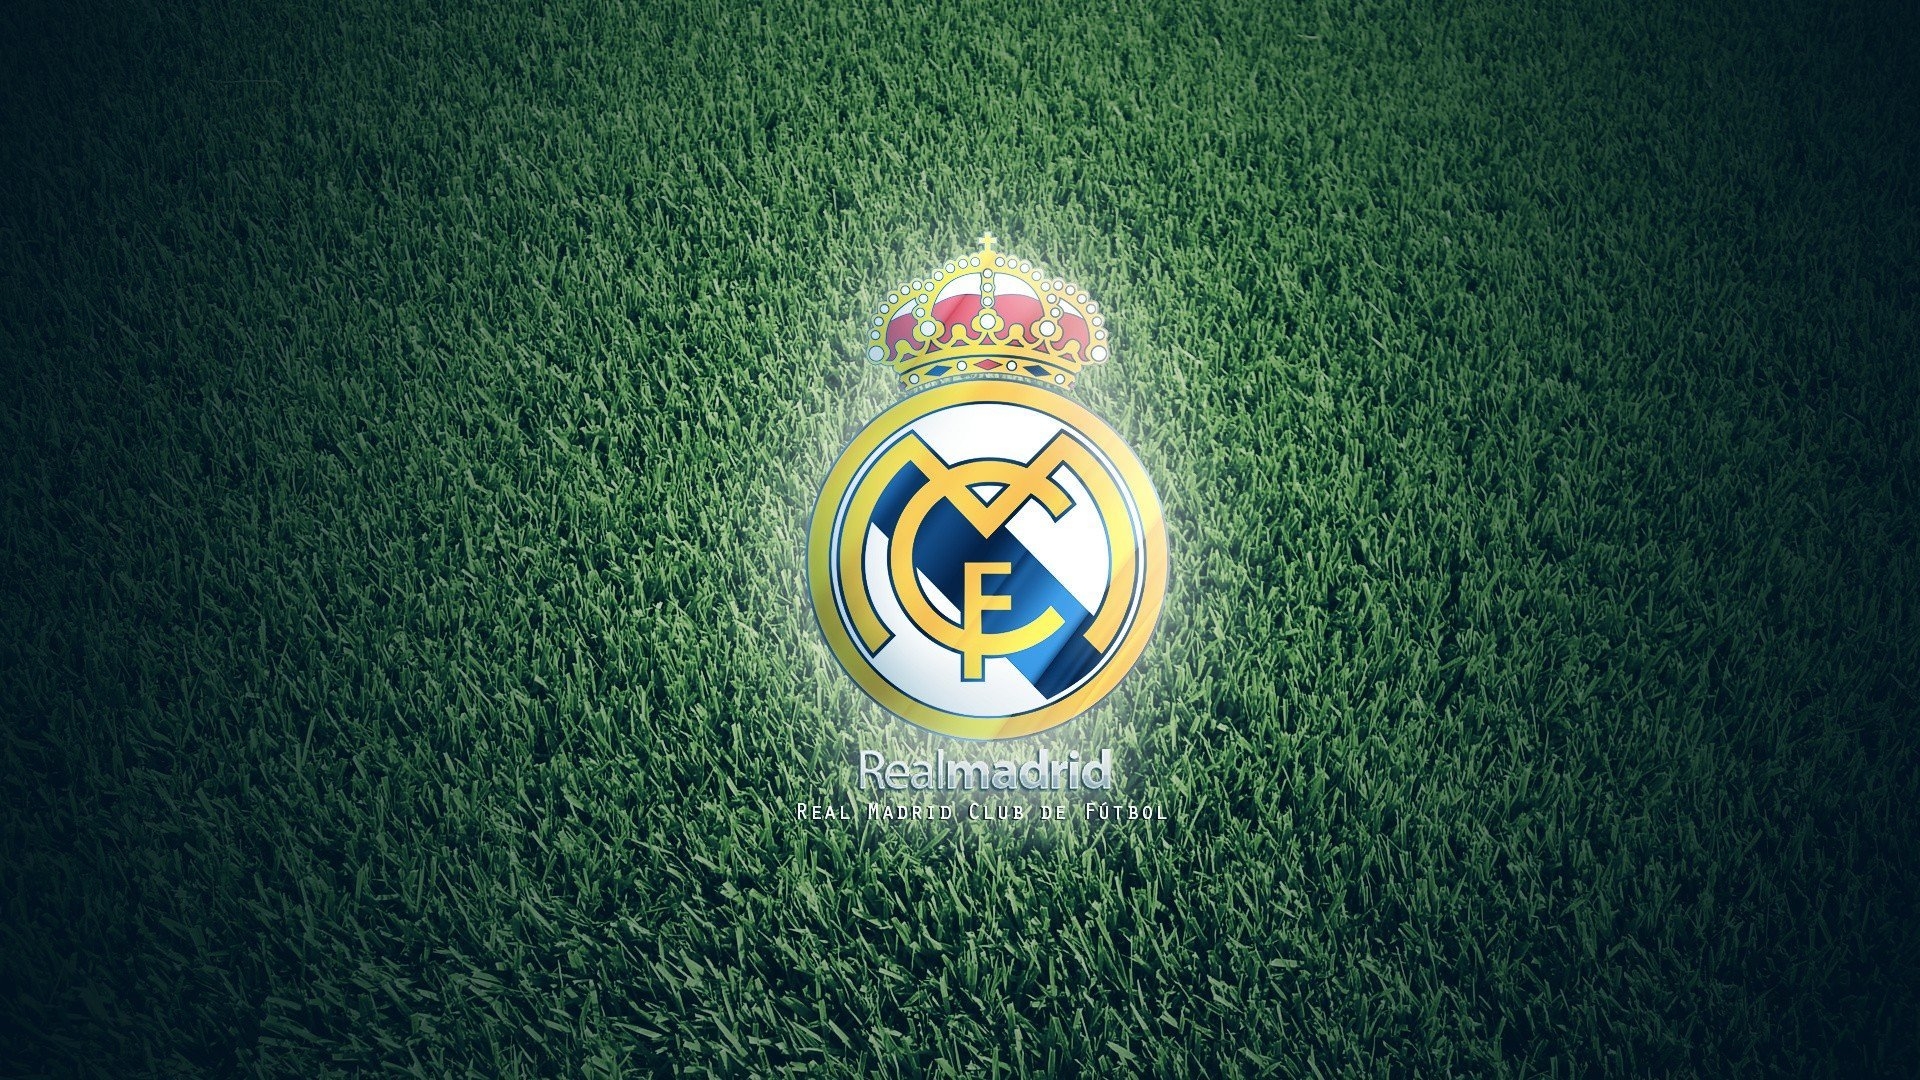 Elegant Real Madrid Logo Wallpaper Great Foofball Club